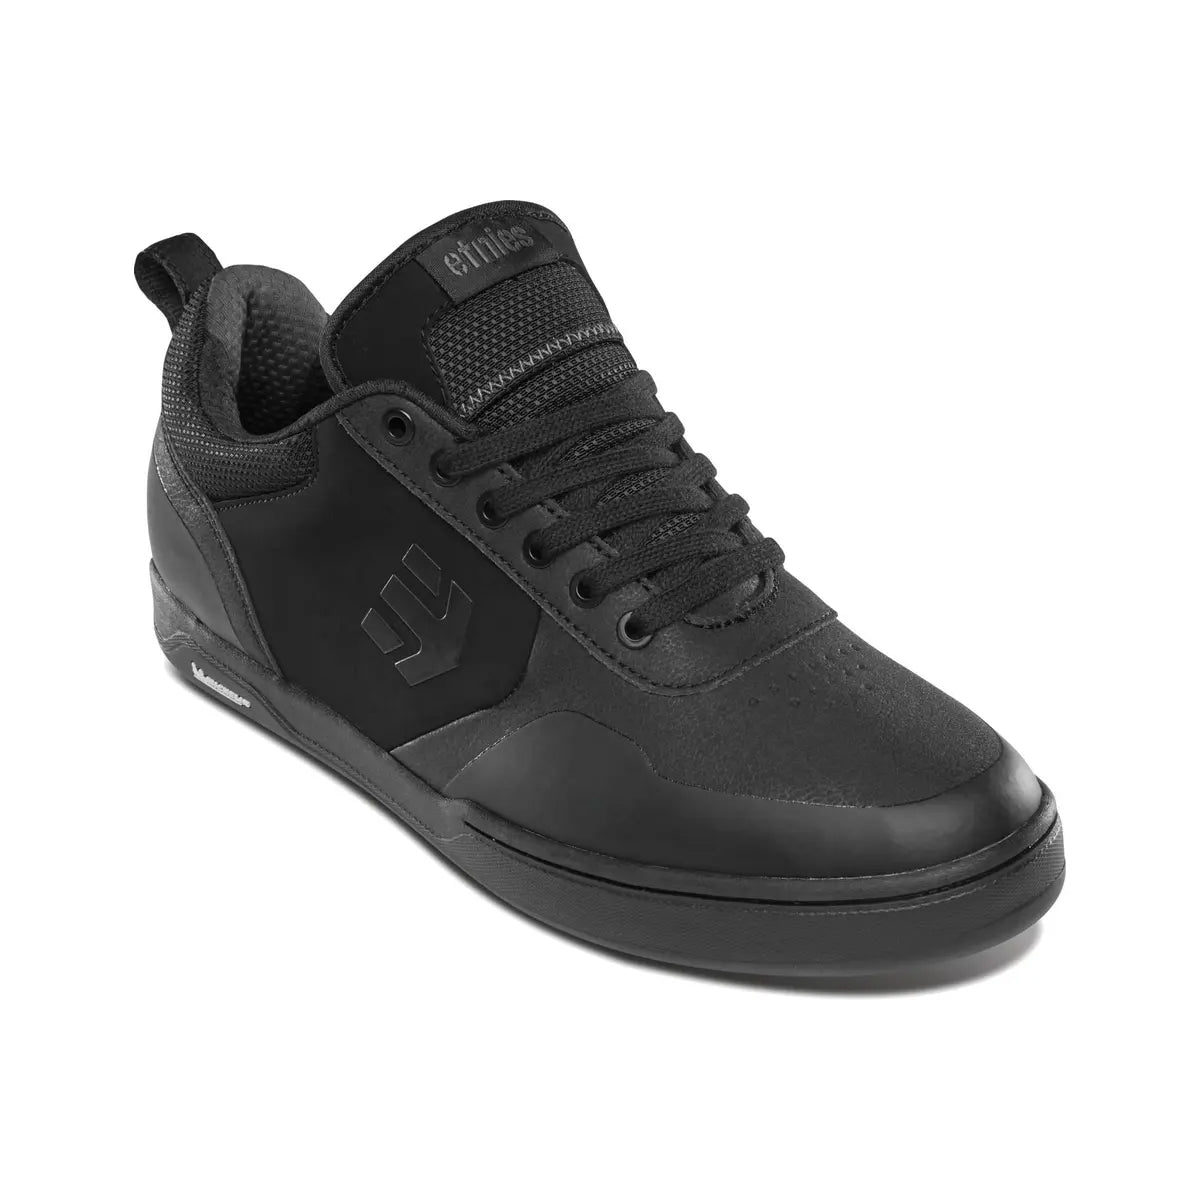 Etnies Culvert Flat Shoes - US 10.0 - Black - Black - Reflective